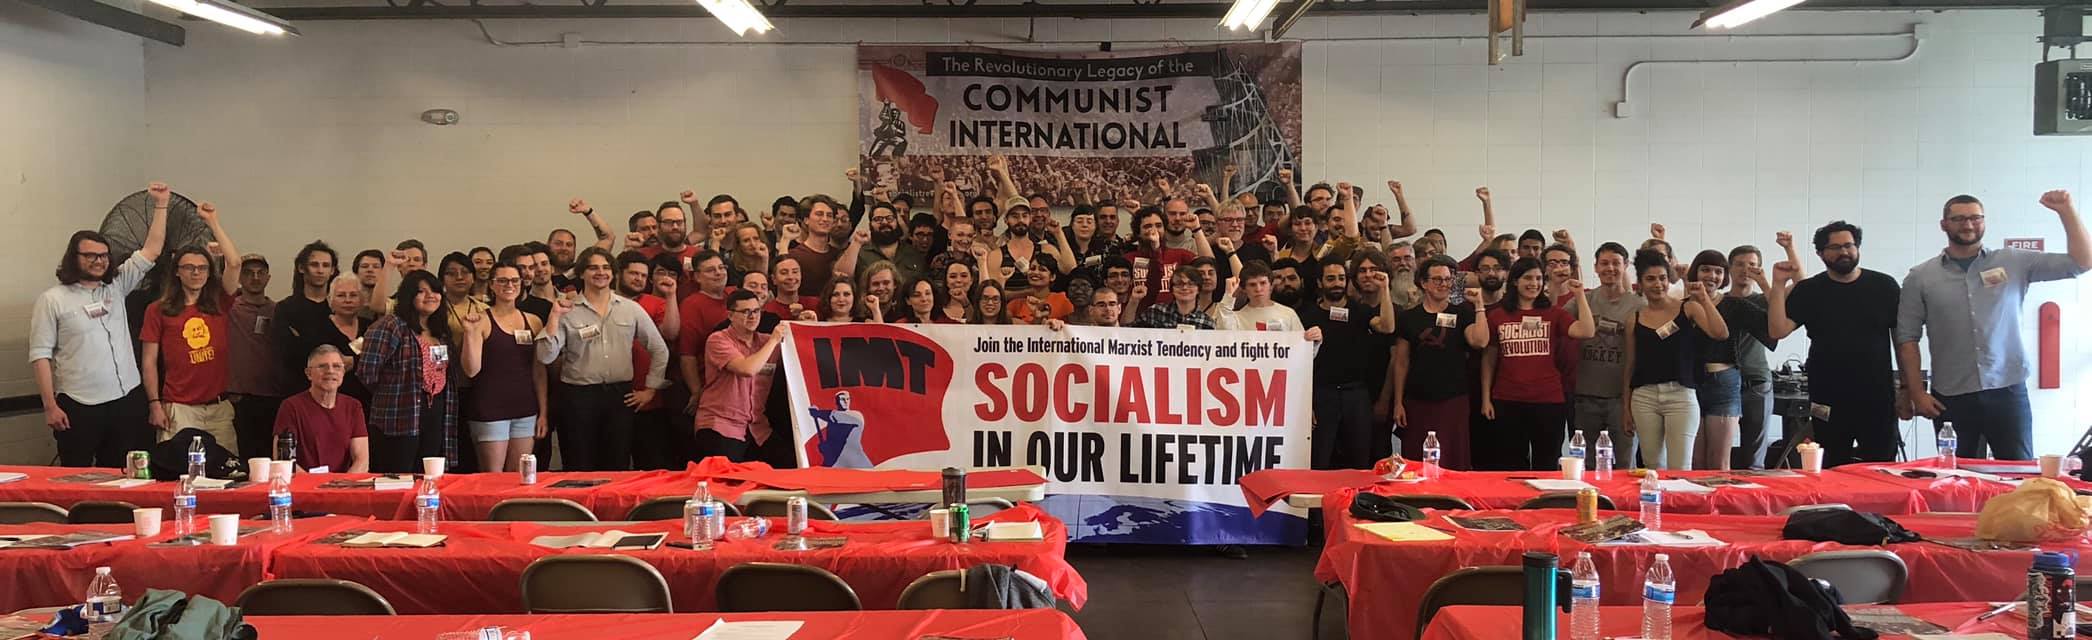 Socialist Rev IMT